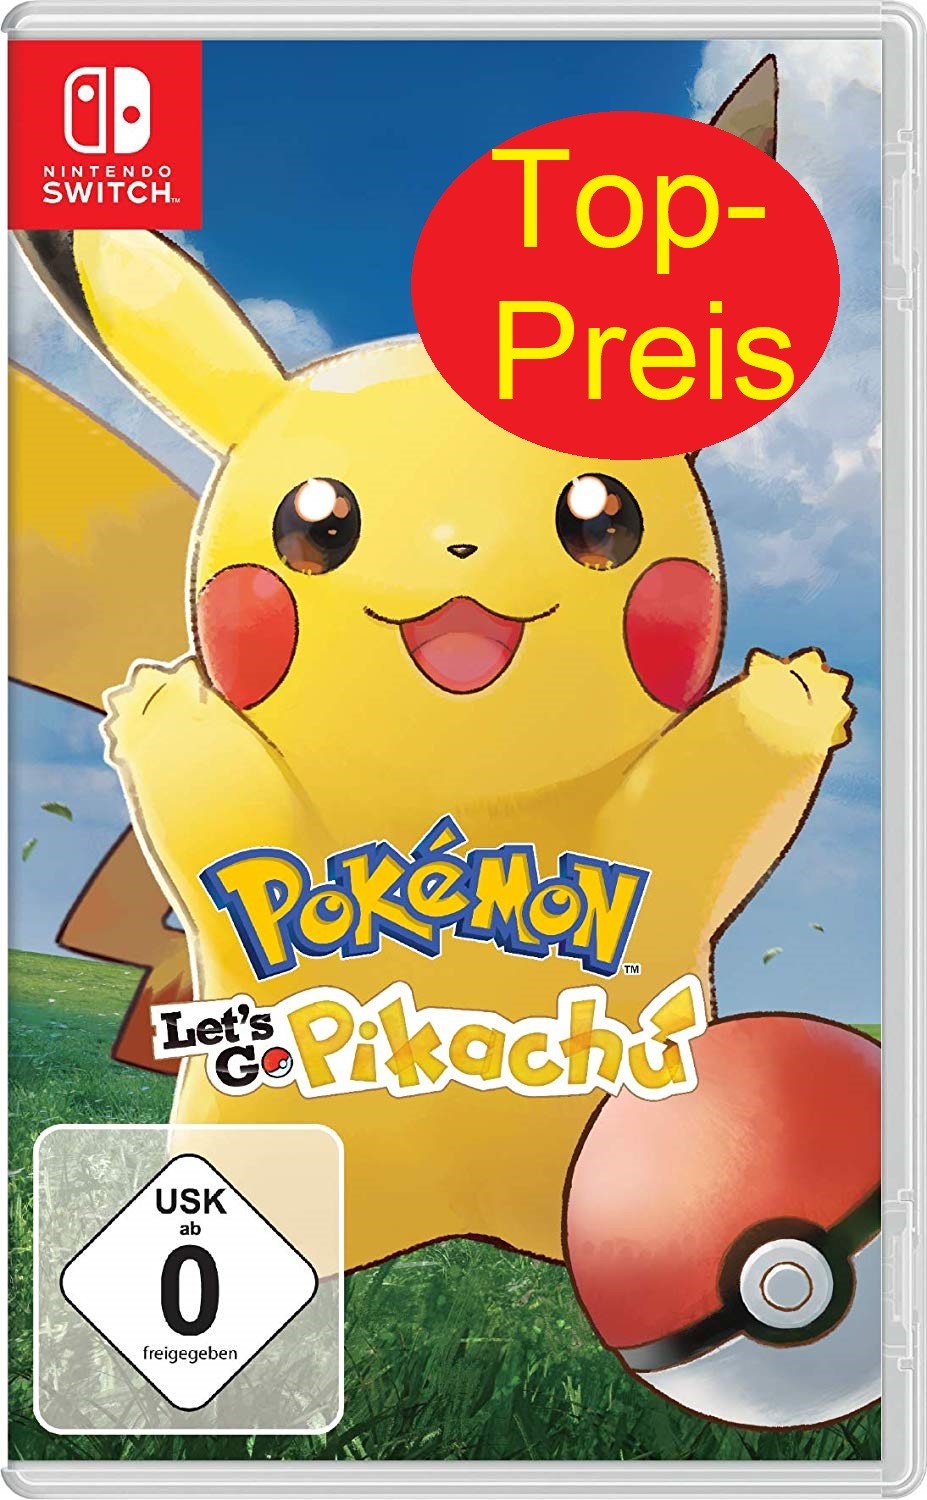 Pokemon Lets go Pikachu